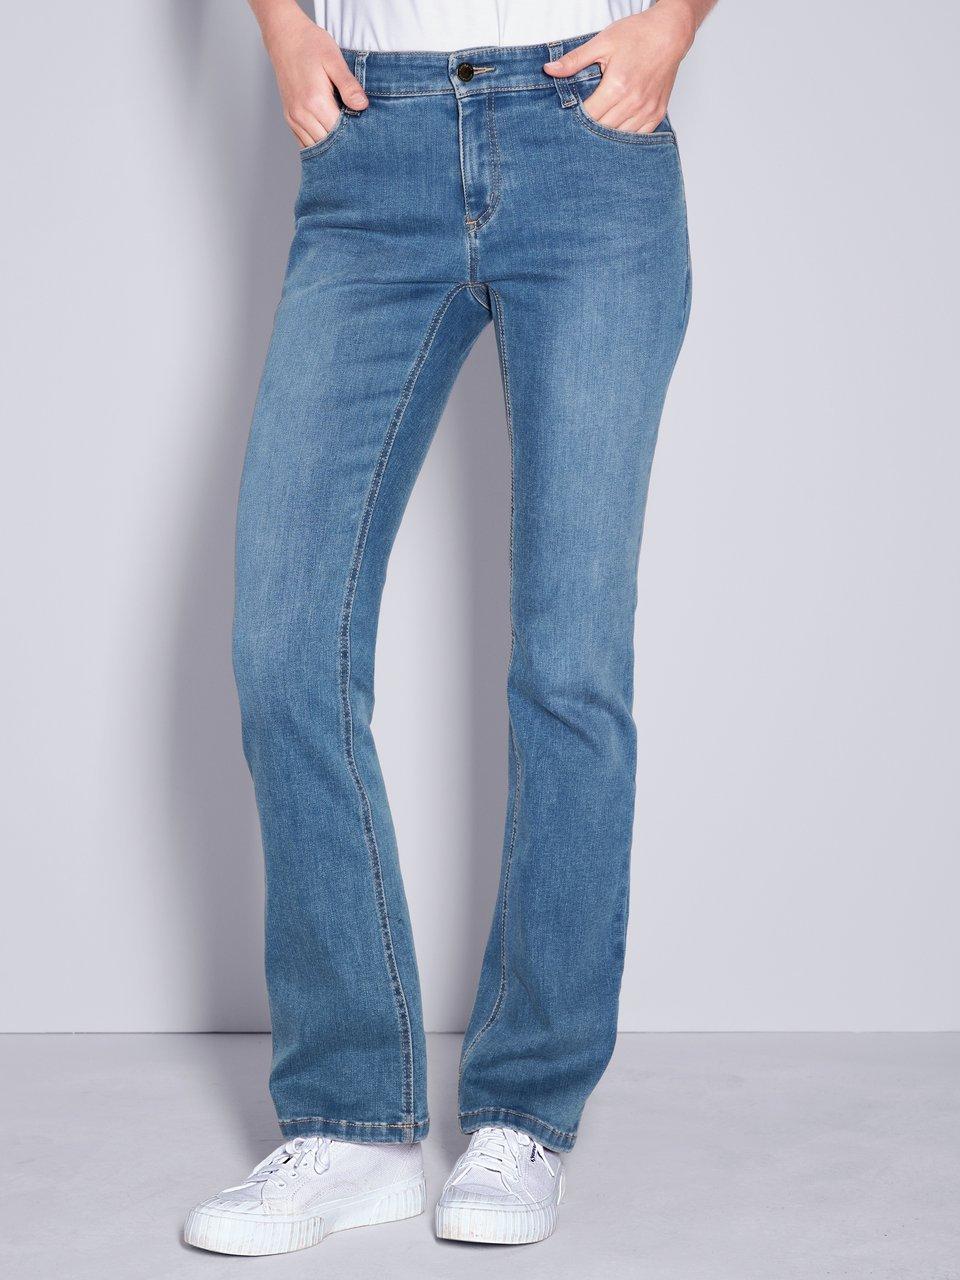 Wonderjeans - Jeans